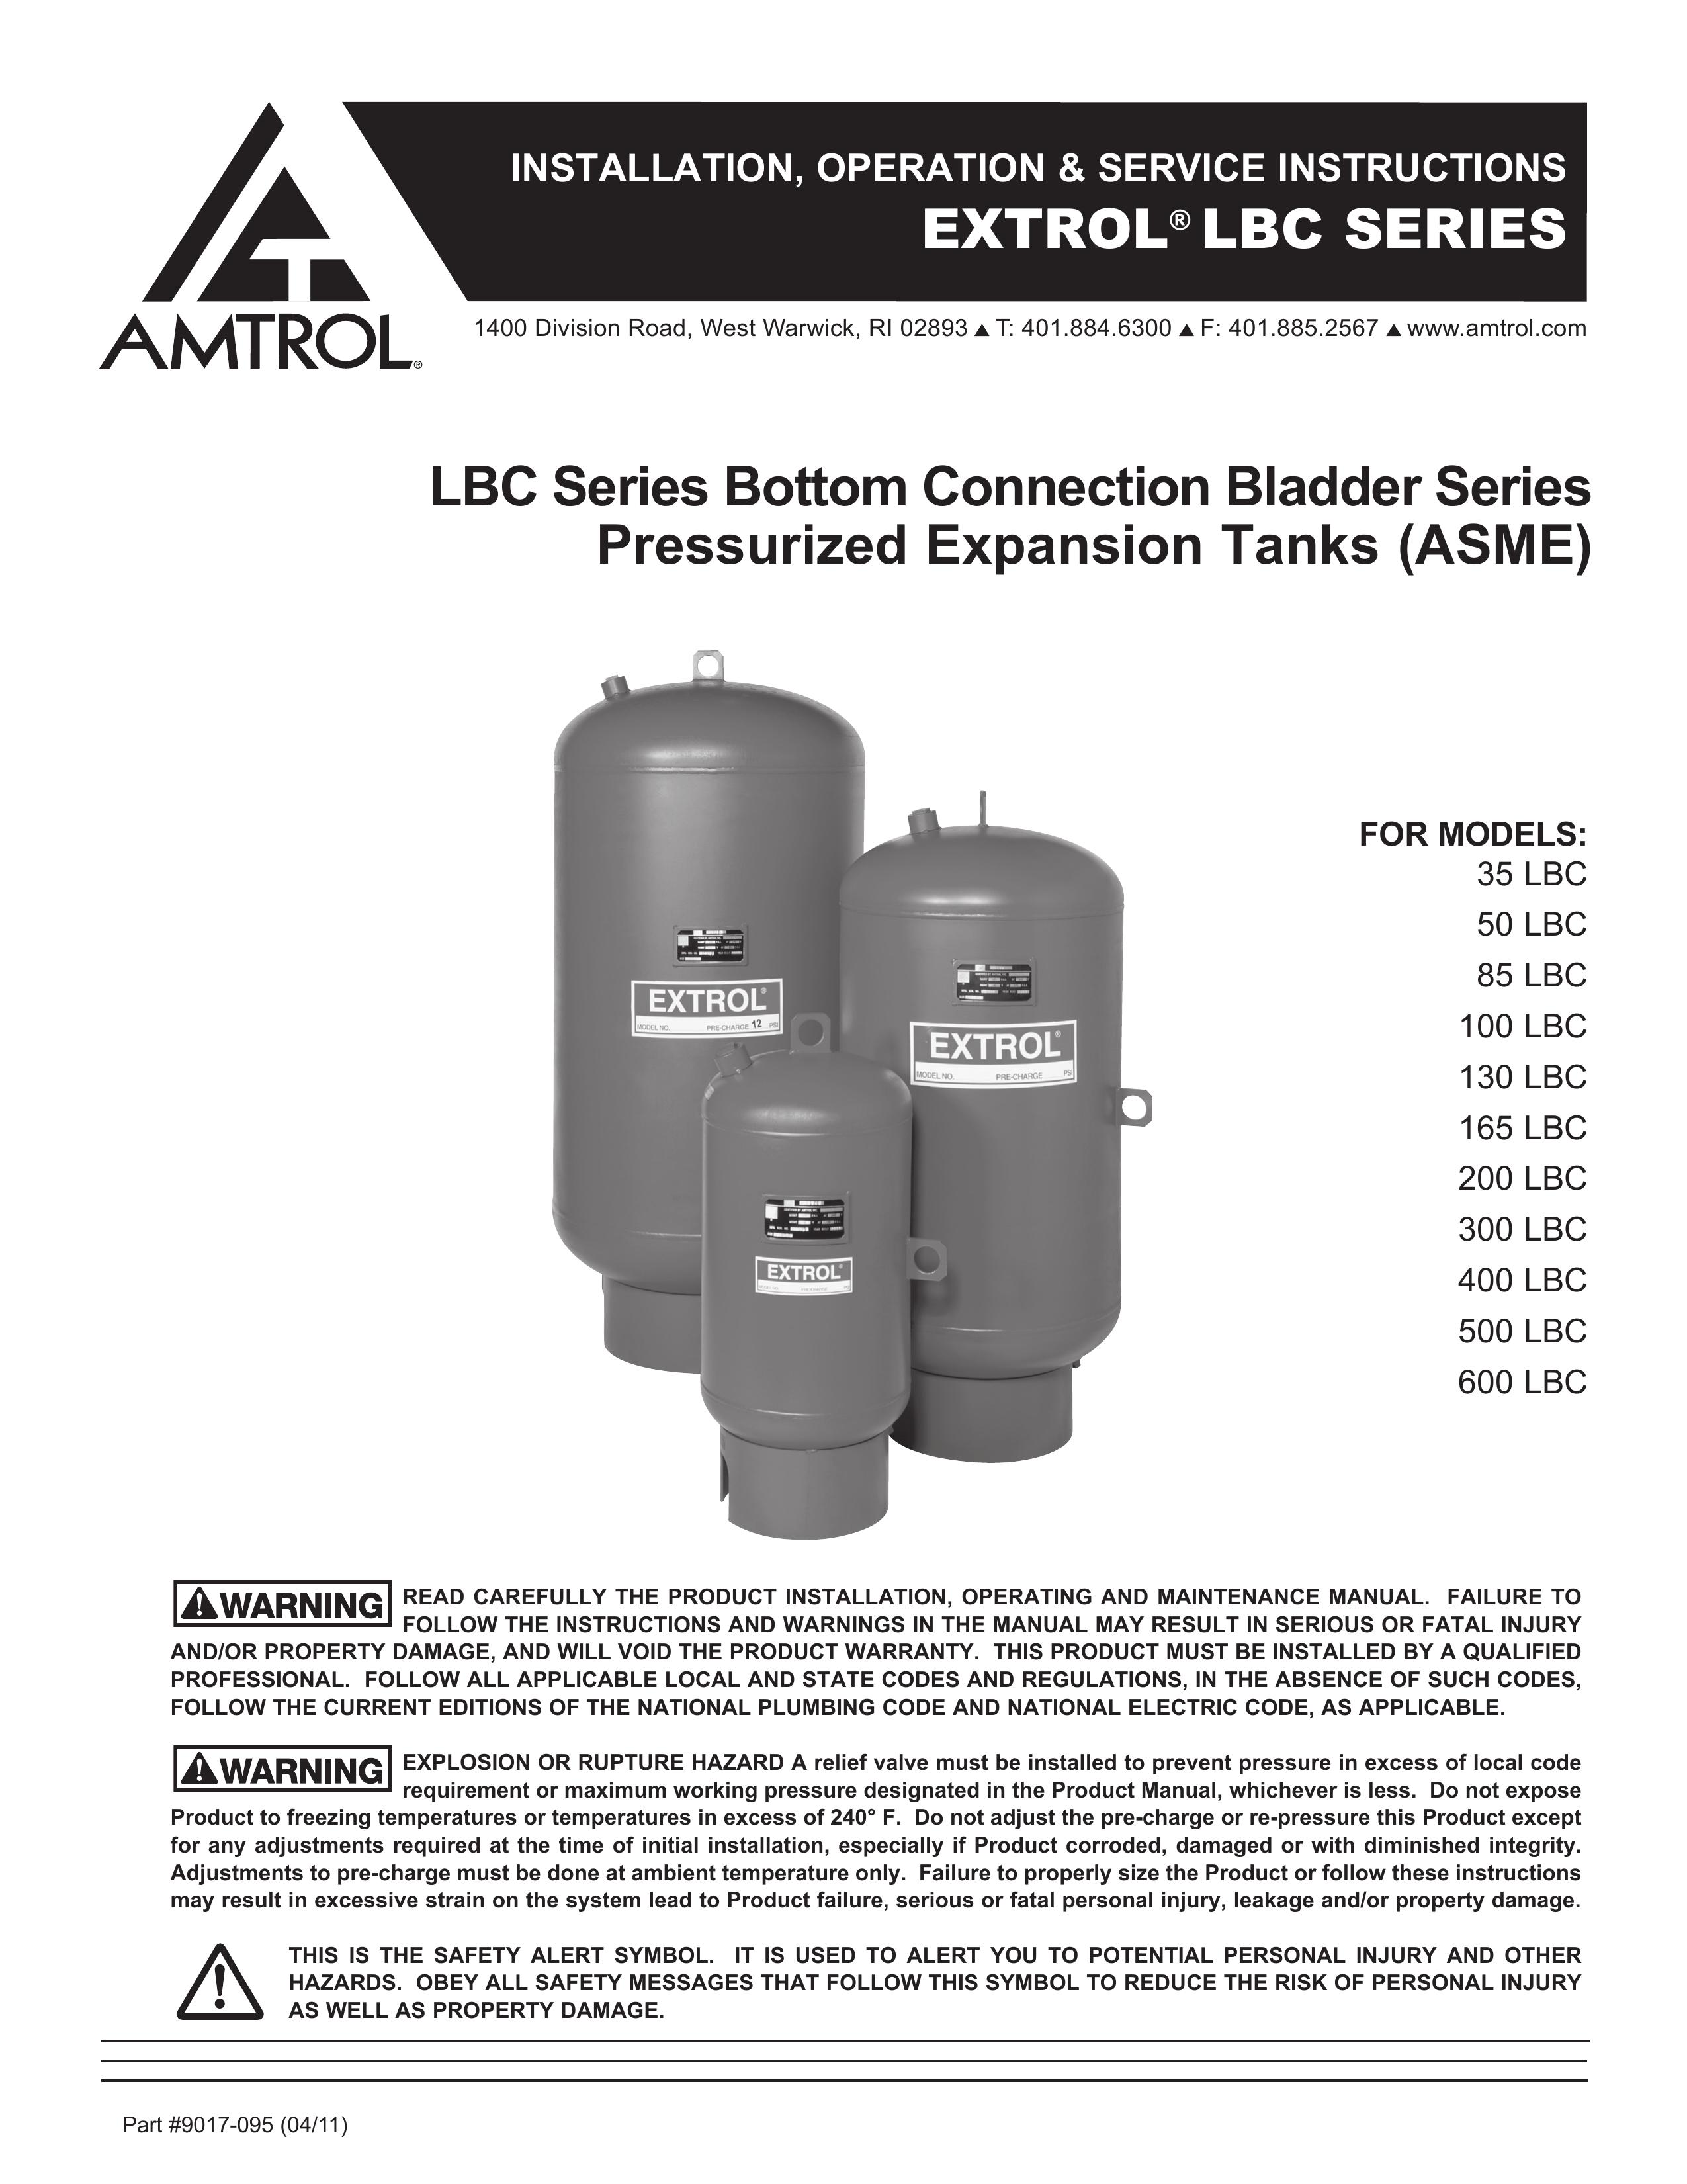 Amtrol 300 LBC Oxygen Equipment User Manual